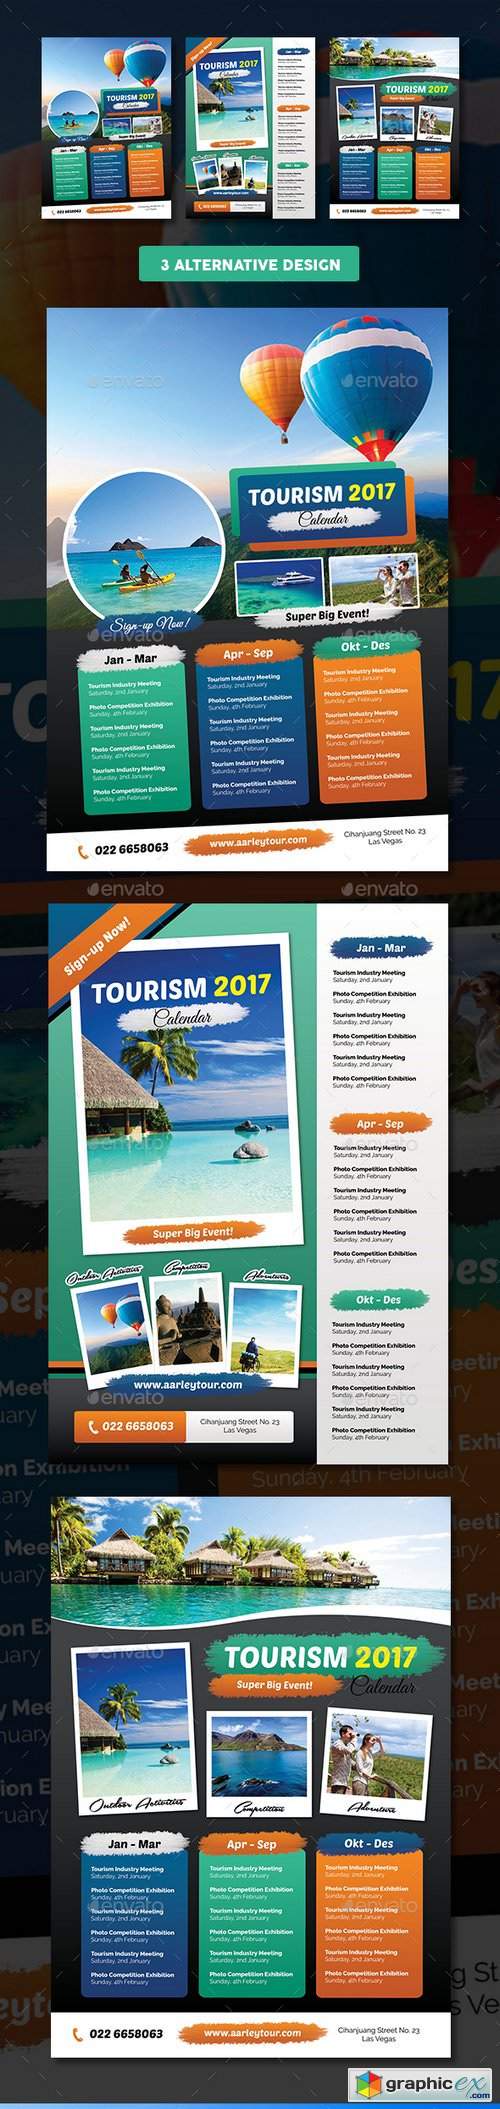 Tourism Events Calendar Flyer Template